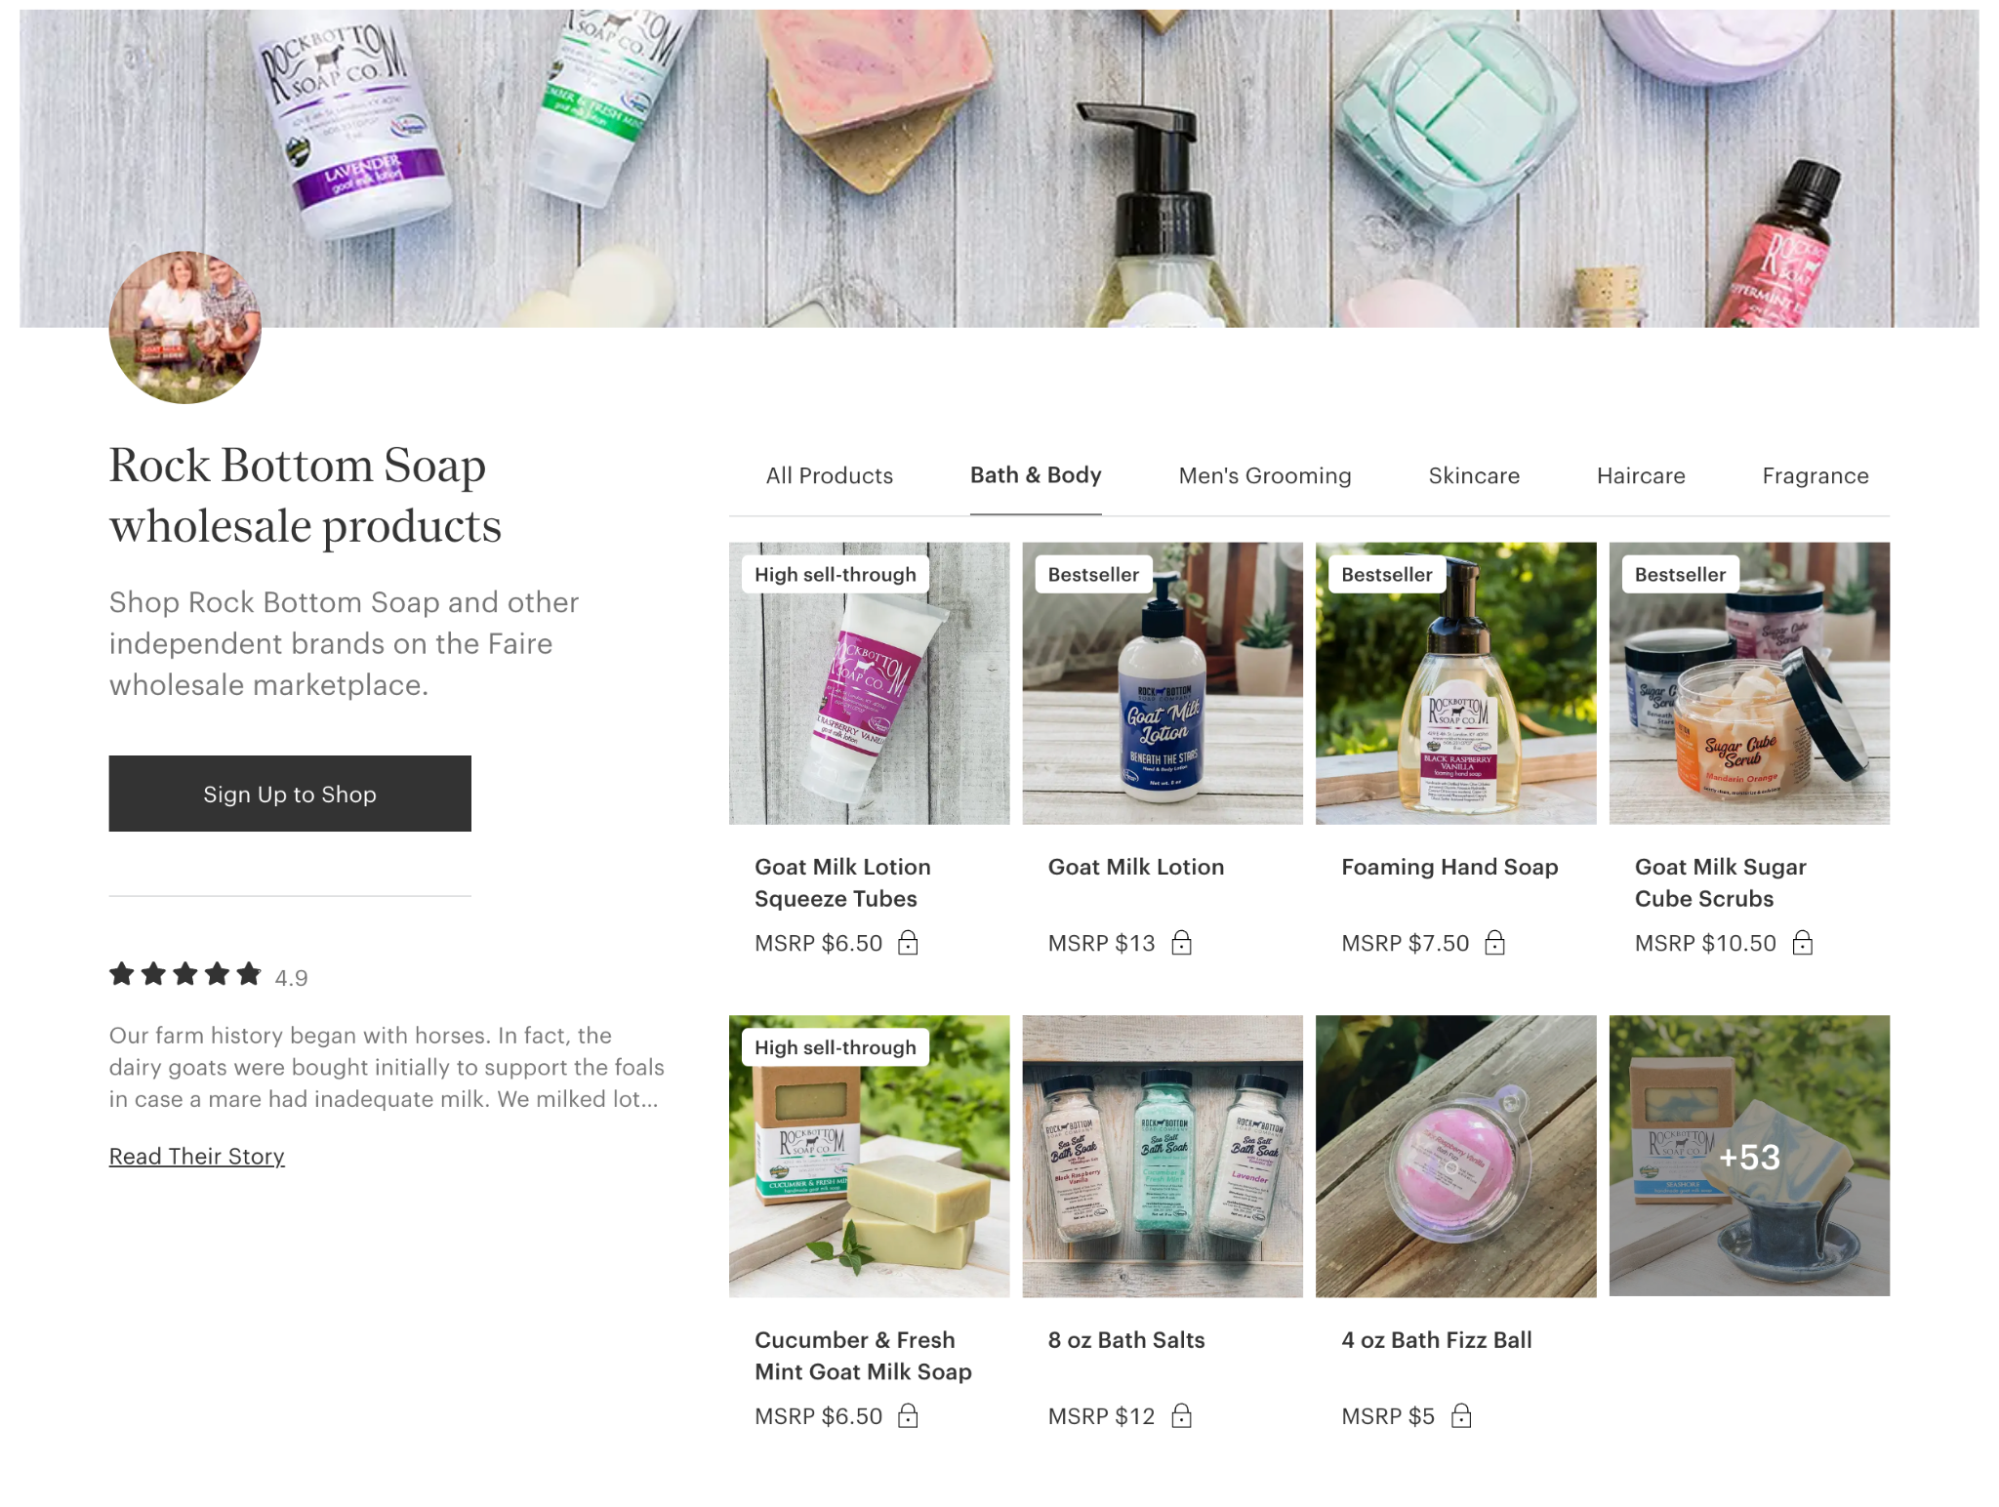 Image of Rock Bottom Soap’s profile on Faire wholesale marketplace